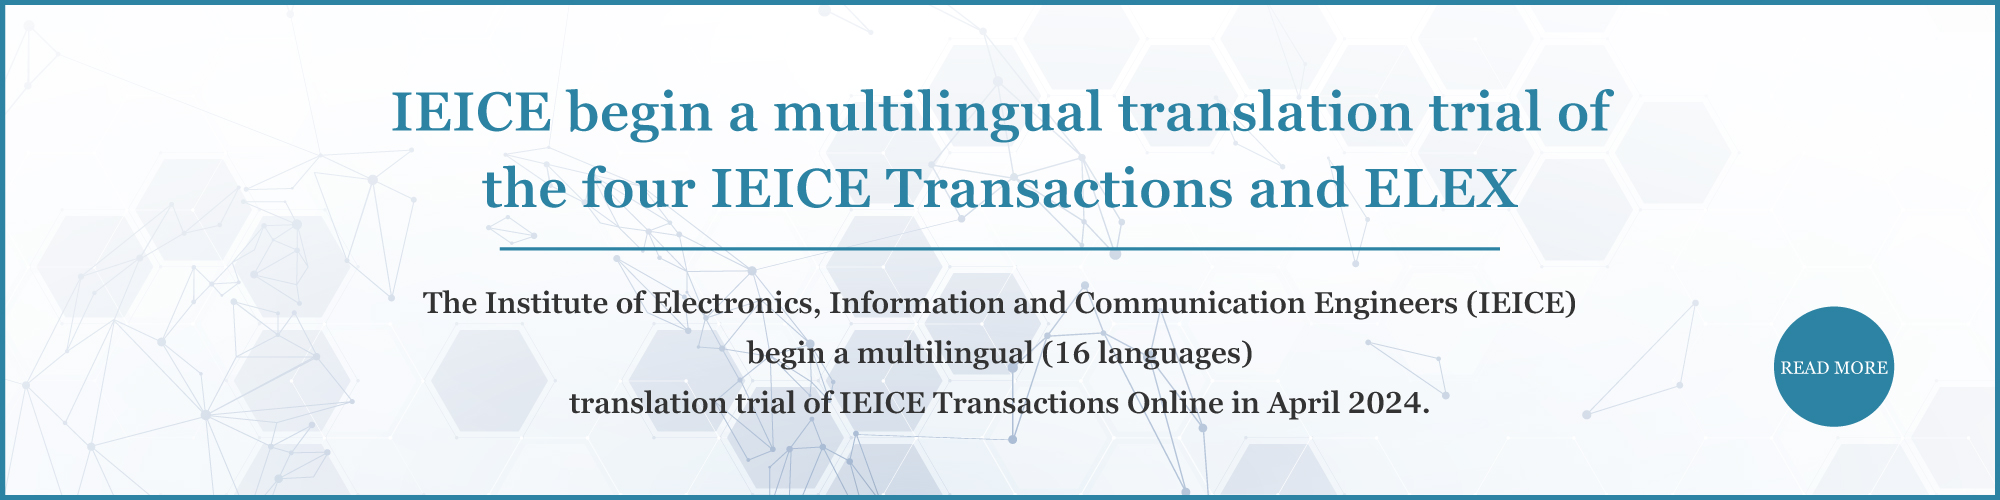 IEICE Transactions Online